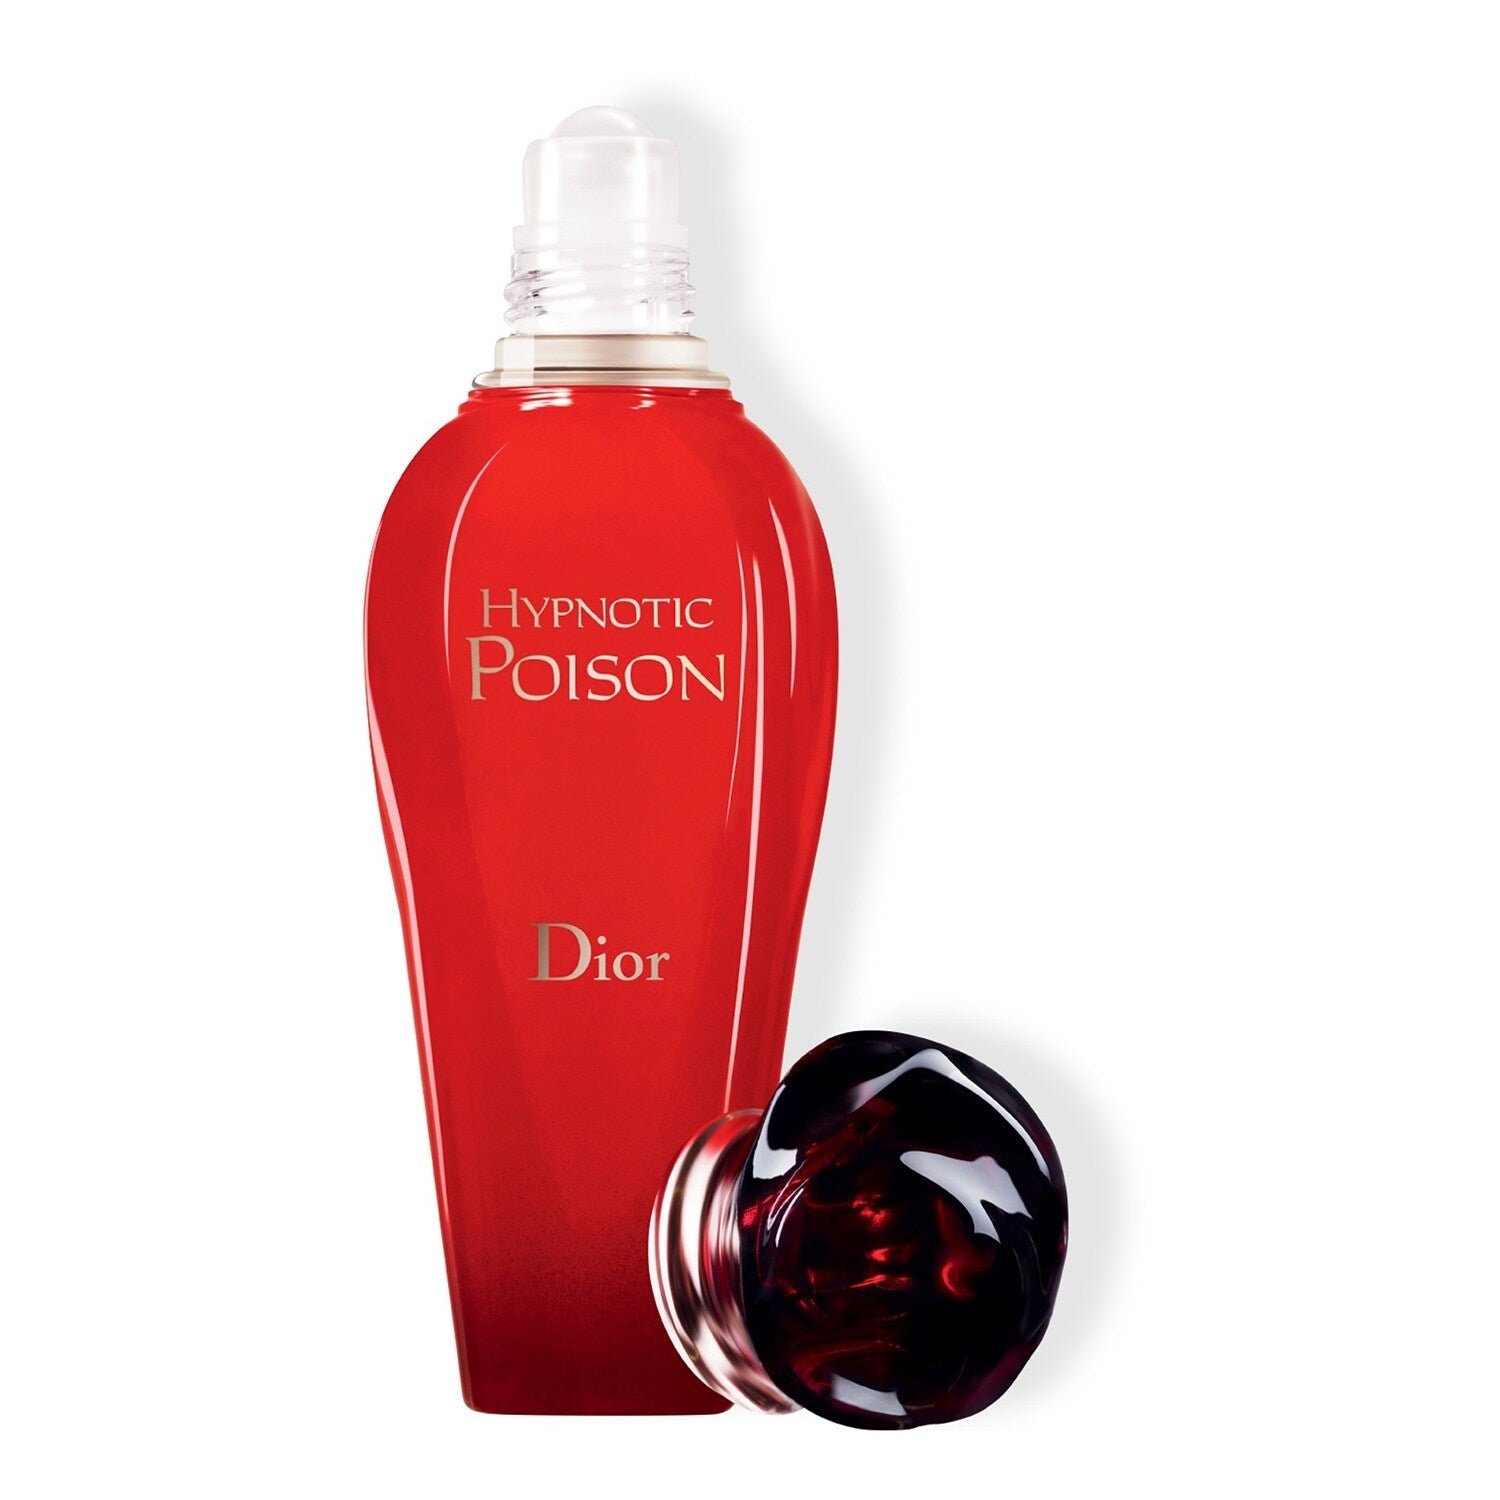 Dior Hypnotic Poison Roller-Pearl EDT | My Perfume Shop Australia